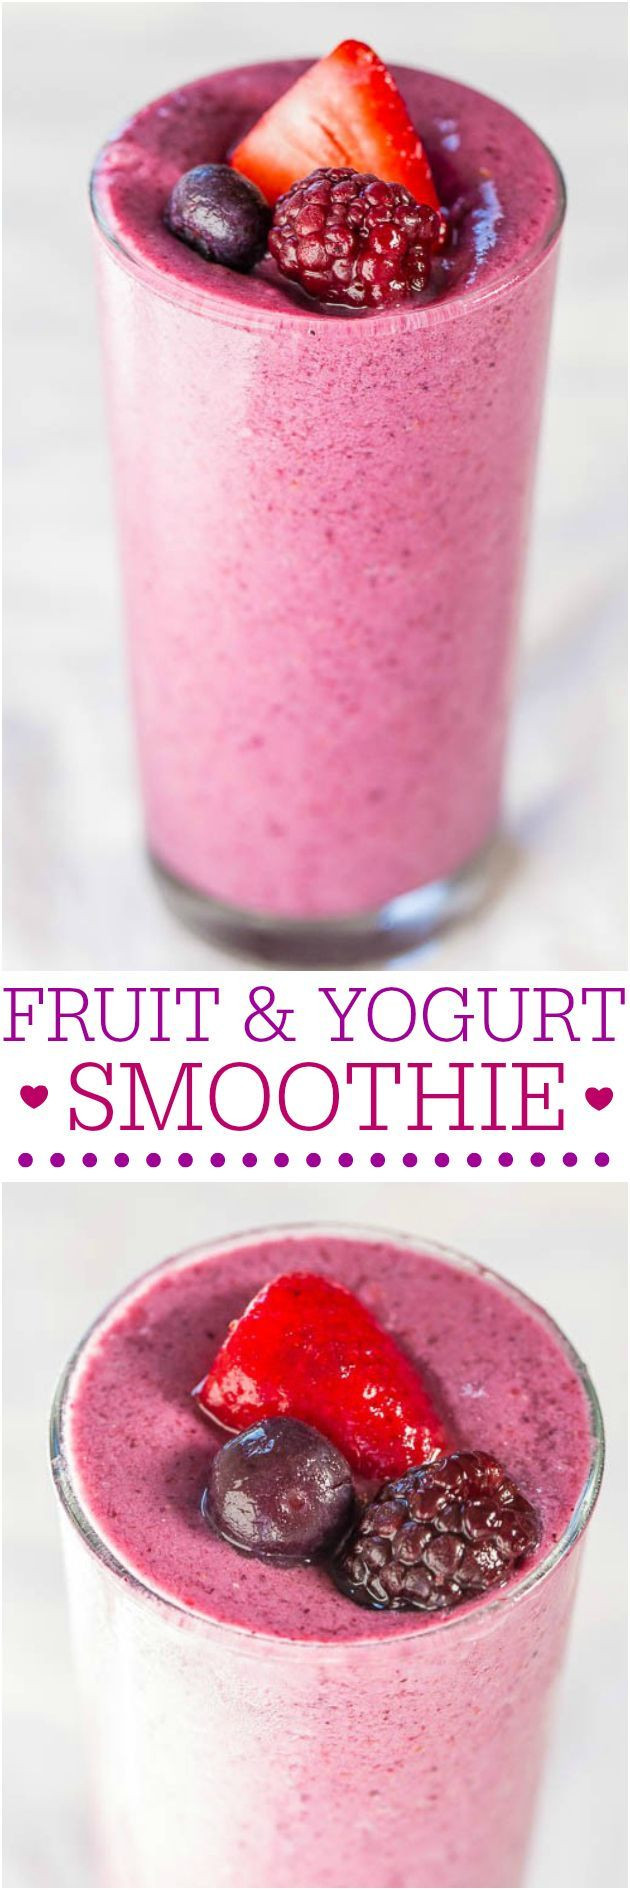 Healthy Fruit Smoothies With Yogurt
 25 Best Ideas about Fruit Yogurt on Pinterest